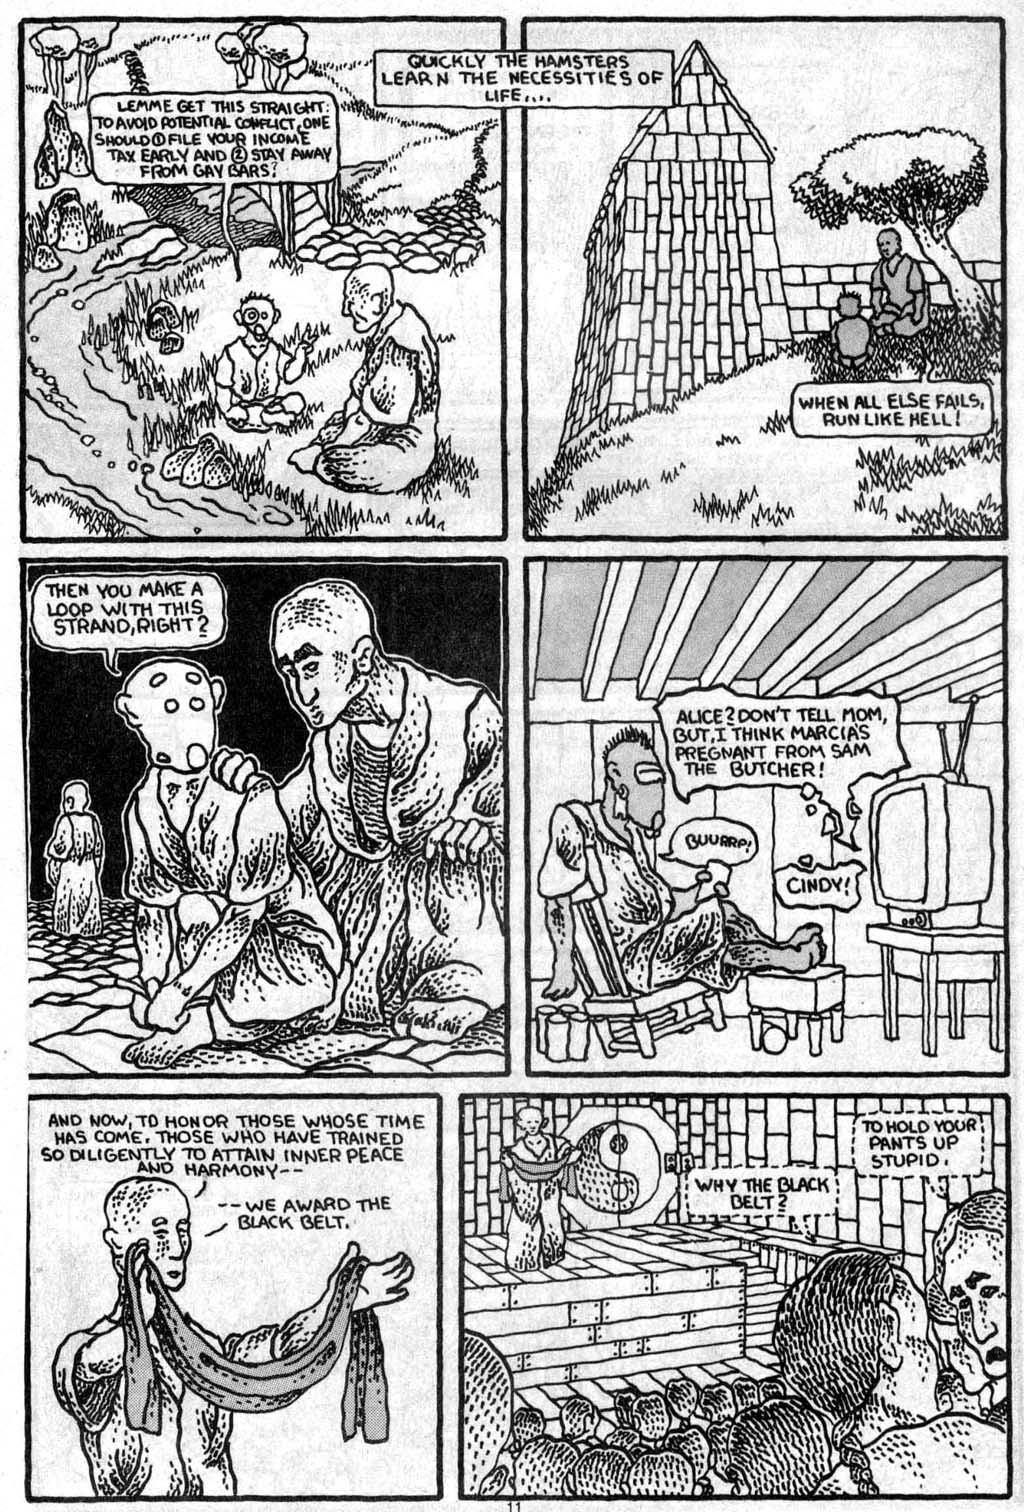 Read online Adolescent Radioactive Black Belt Hamsters comic -  Issue #1 - 11